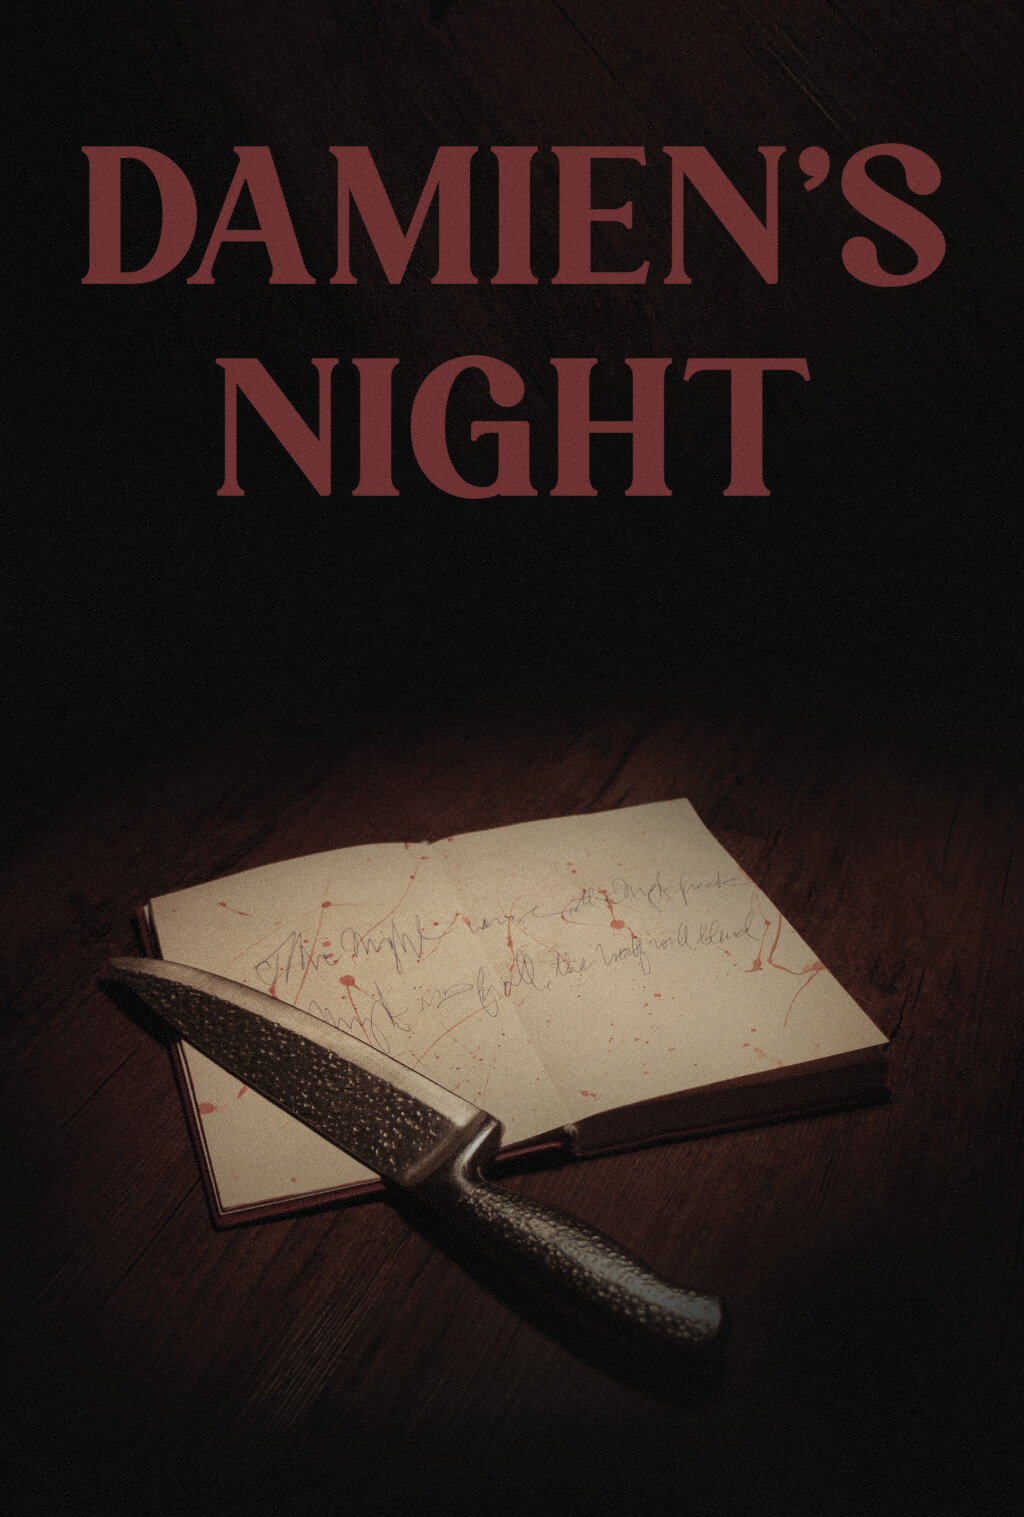 Filmposter for Damien's Night